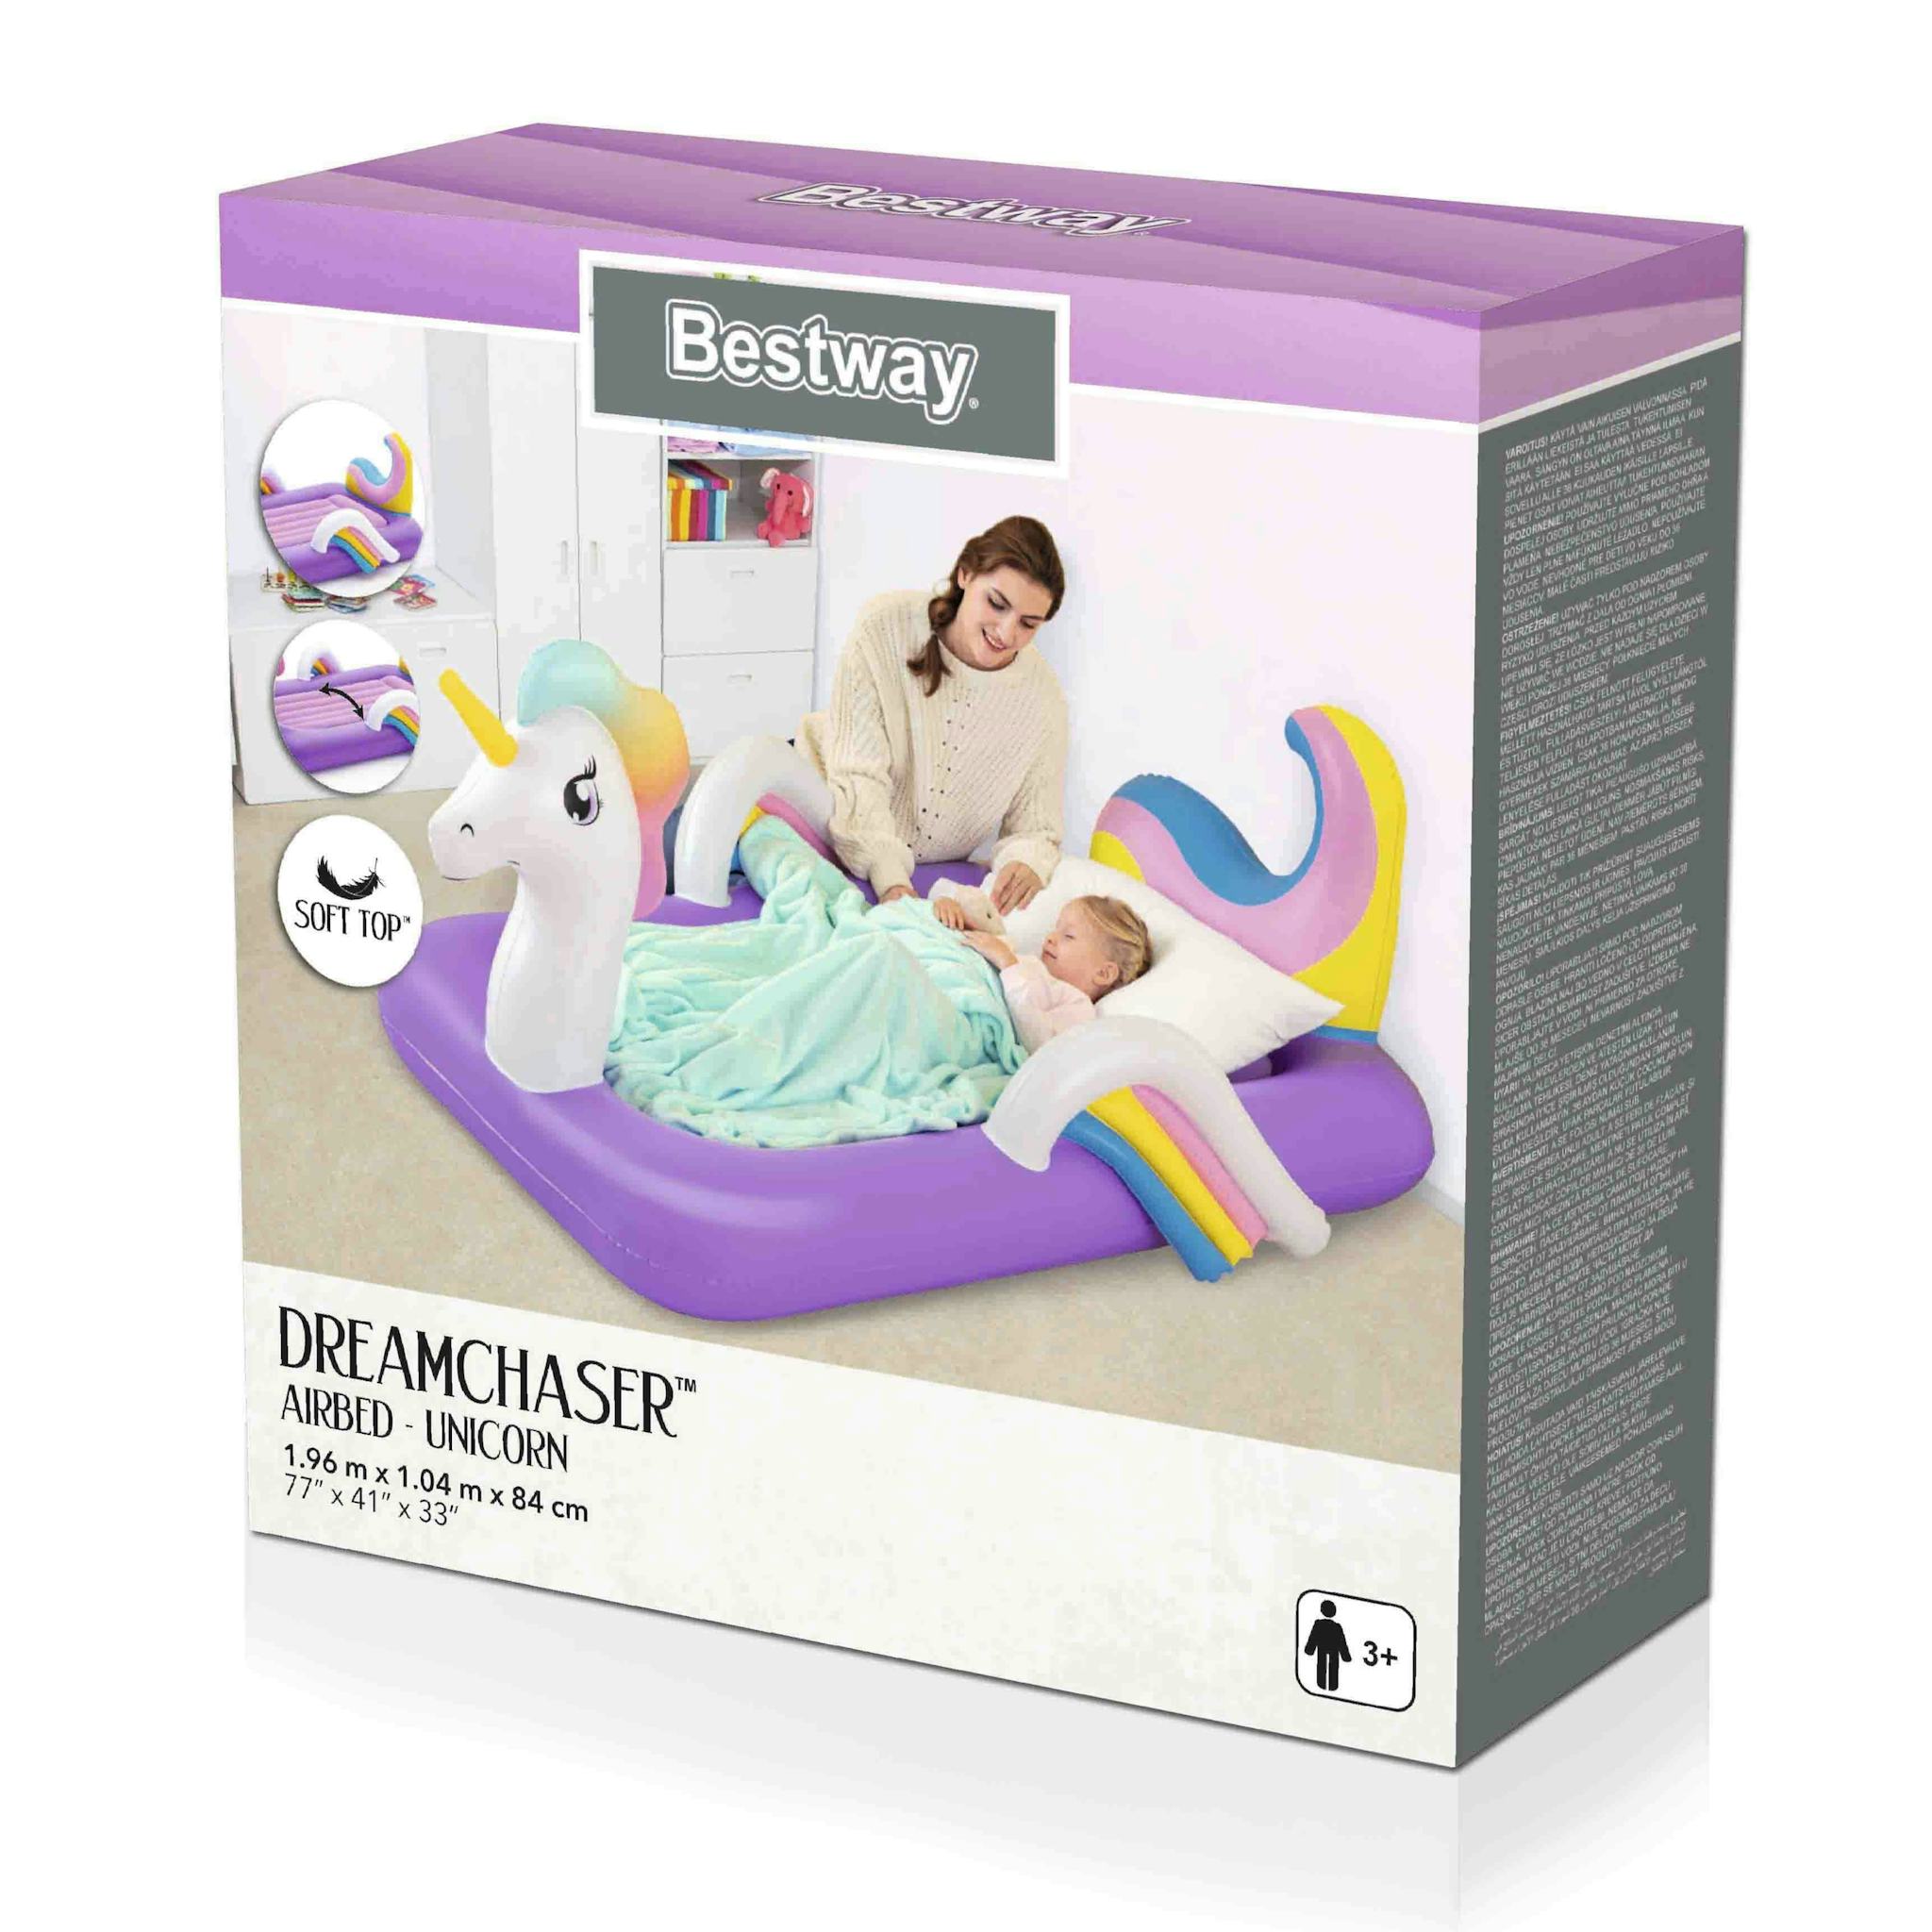 Giochi gonfiabili per bambini Materasso gonfiabile per bambini Unicorn DreamChaser Bestway 6